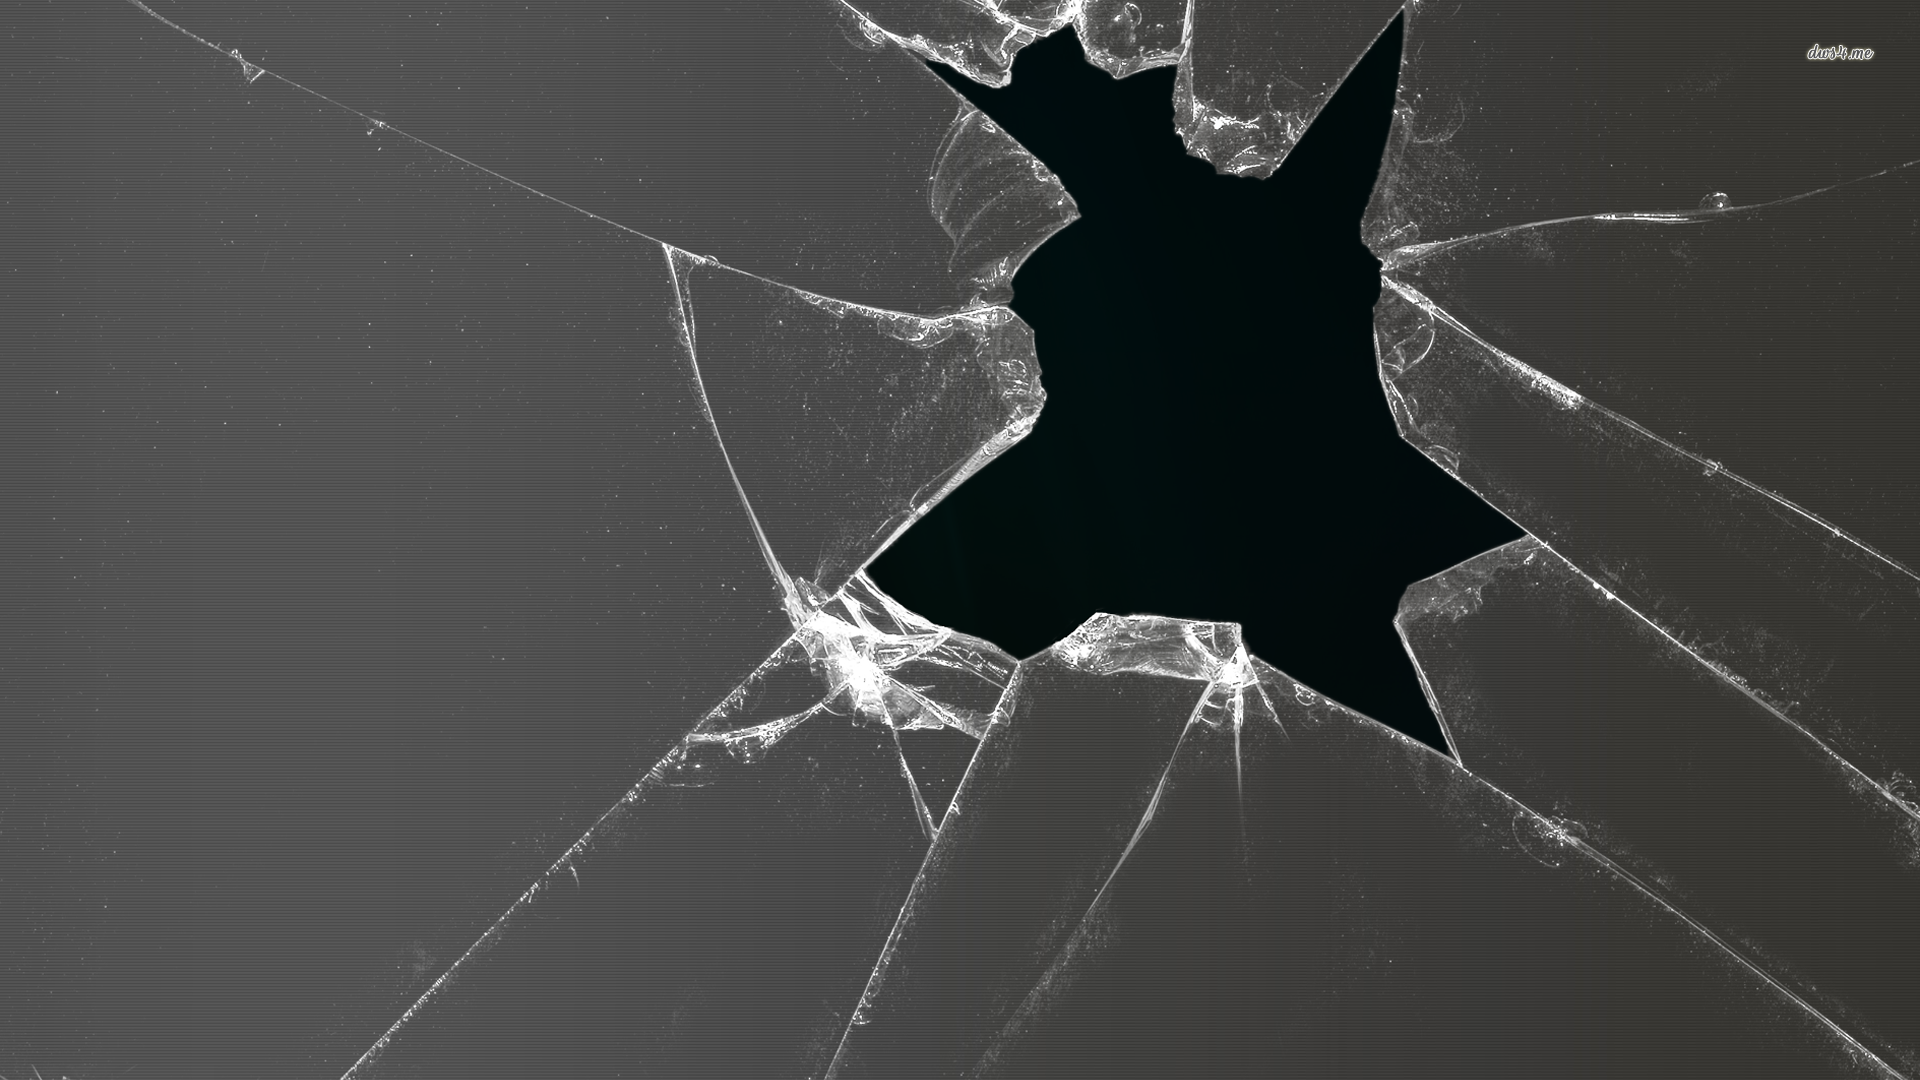 Broken glass wallpaper - Digital Art wallpapers - #9830